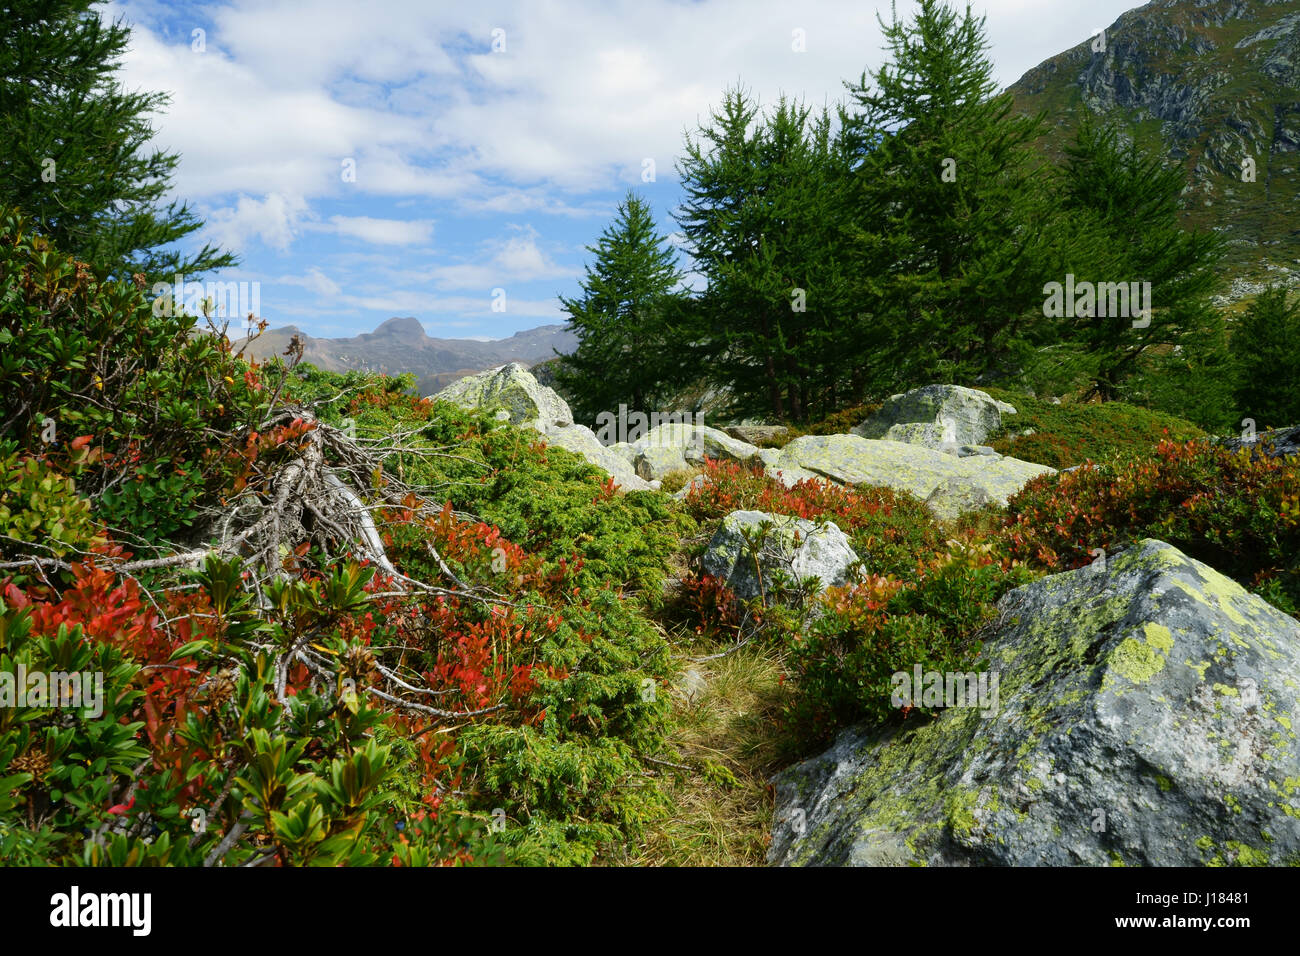 Alpine vegetation with spruce trees, Juniper and Blueberry bushes in Binn Valley, Valais alps, Switzerland Stock Photo